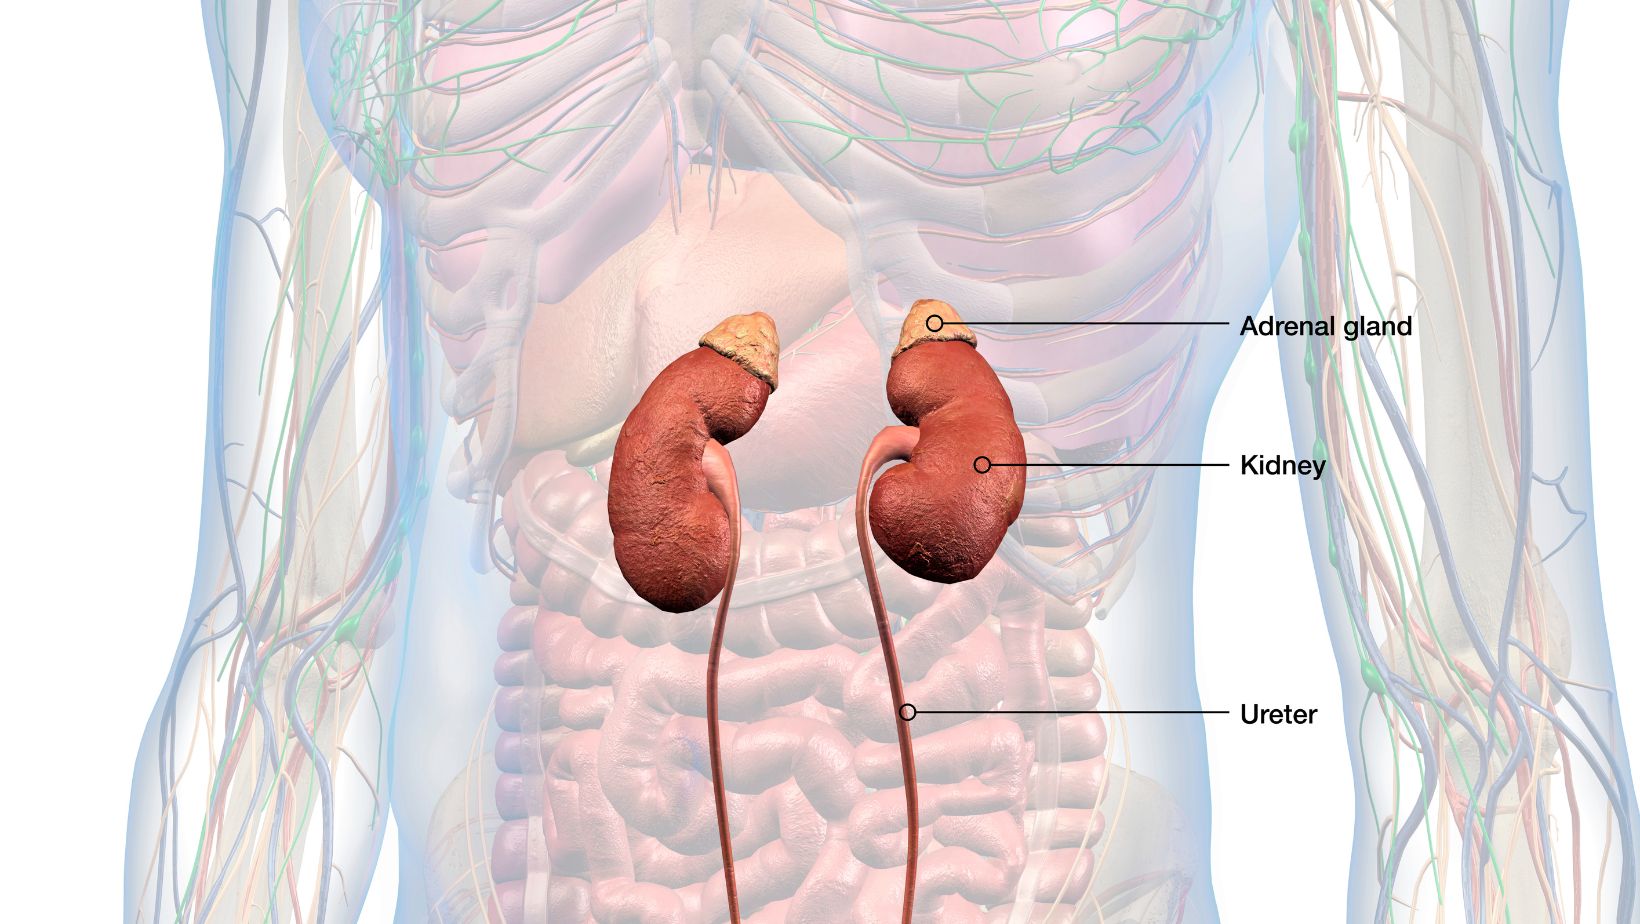 Adrenals, Kidneys, Urinary System, Prostate Gland Labeled